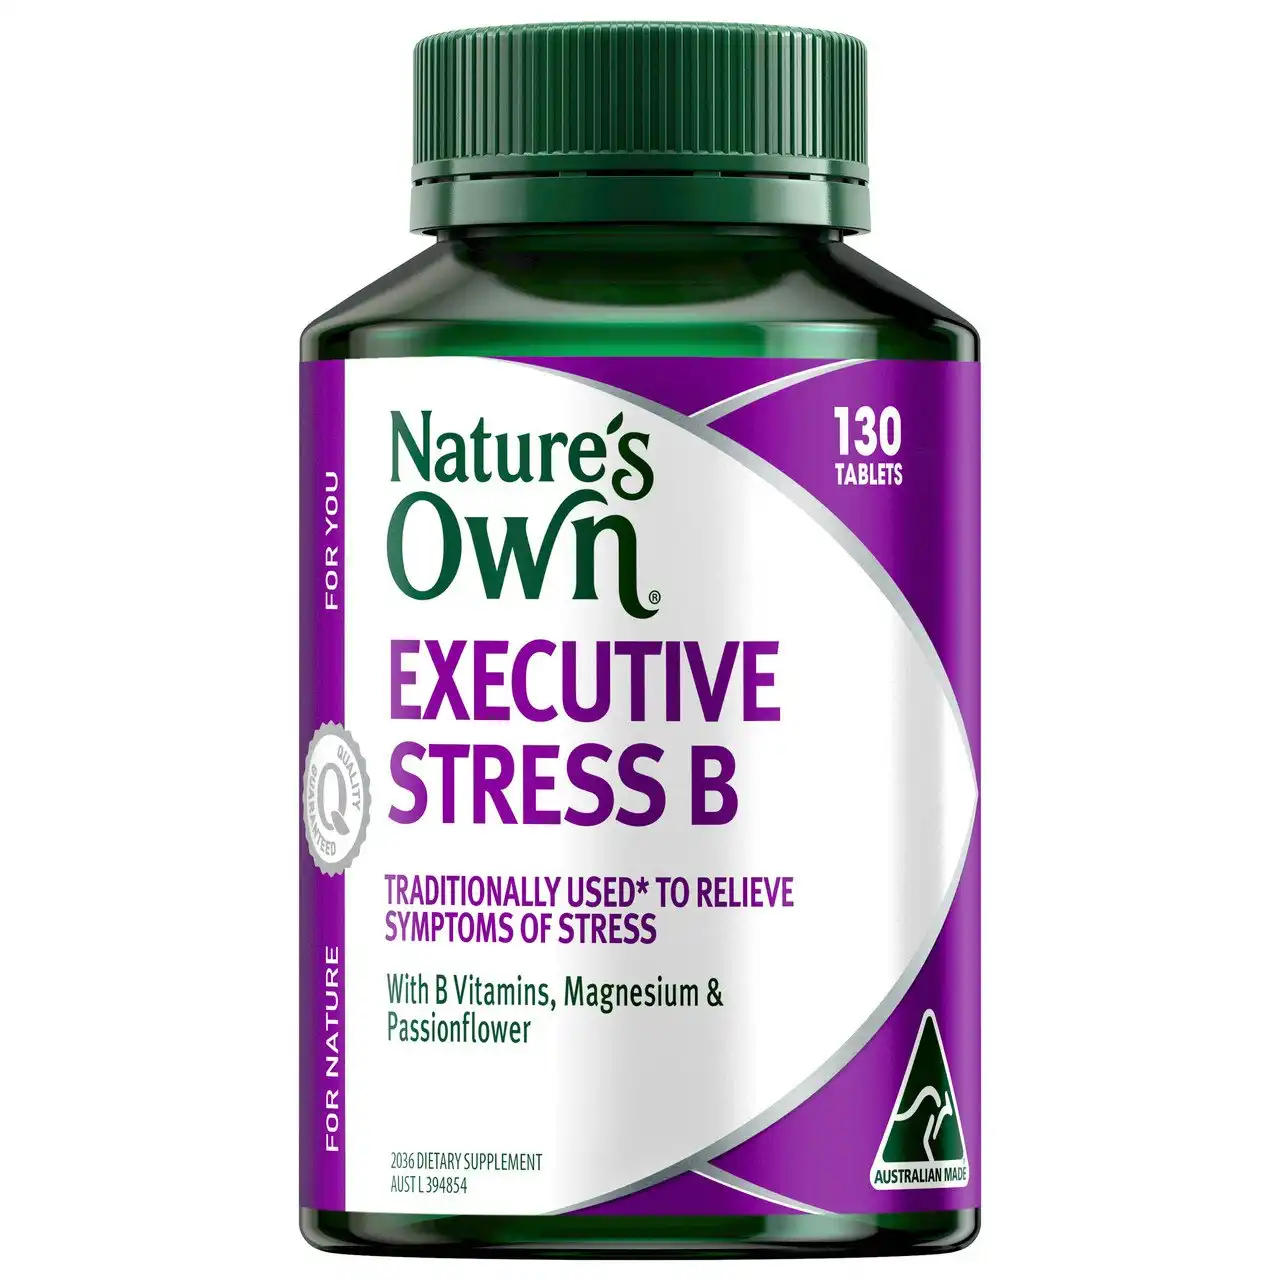 Nature's Own Executive Stress B